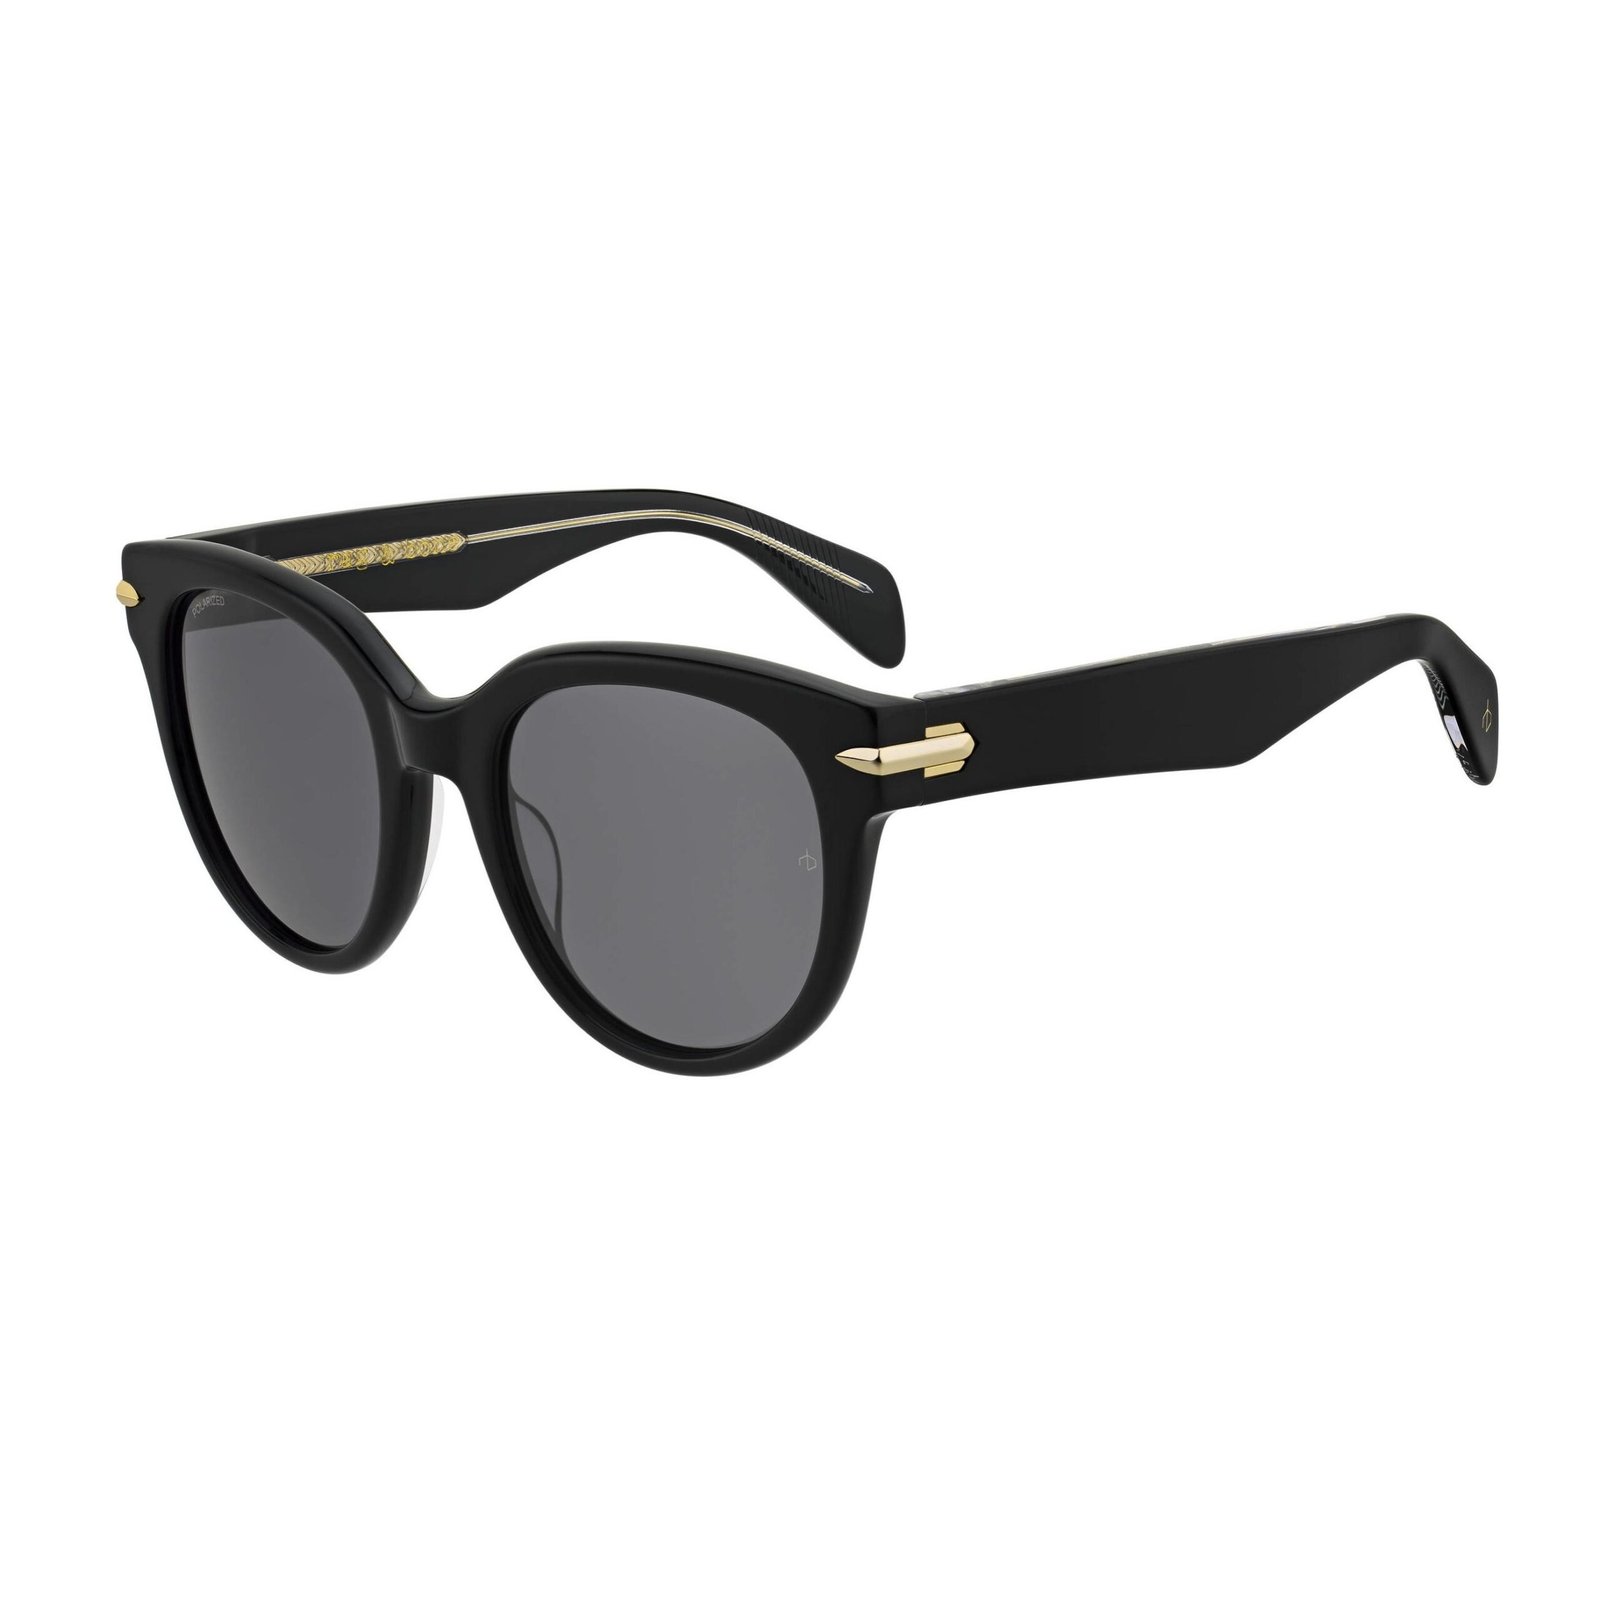 Rag & Bone 1003/S Sunglasses (Black) - Purevision - The Sunglasses Shop ...